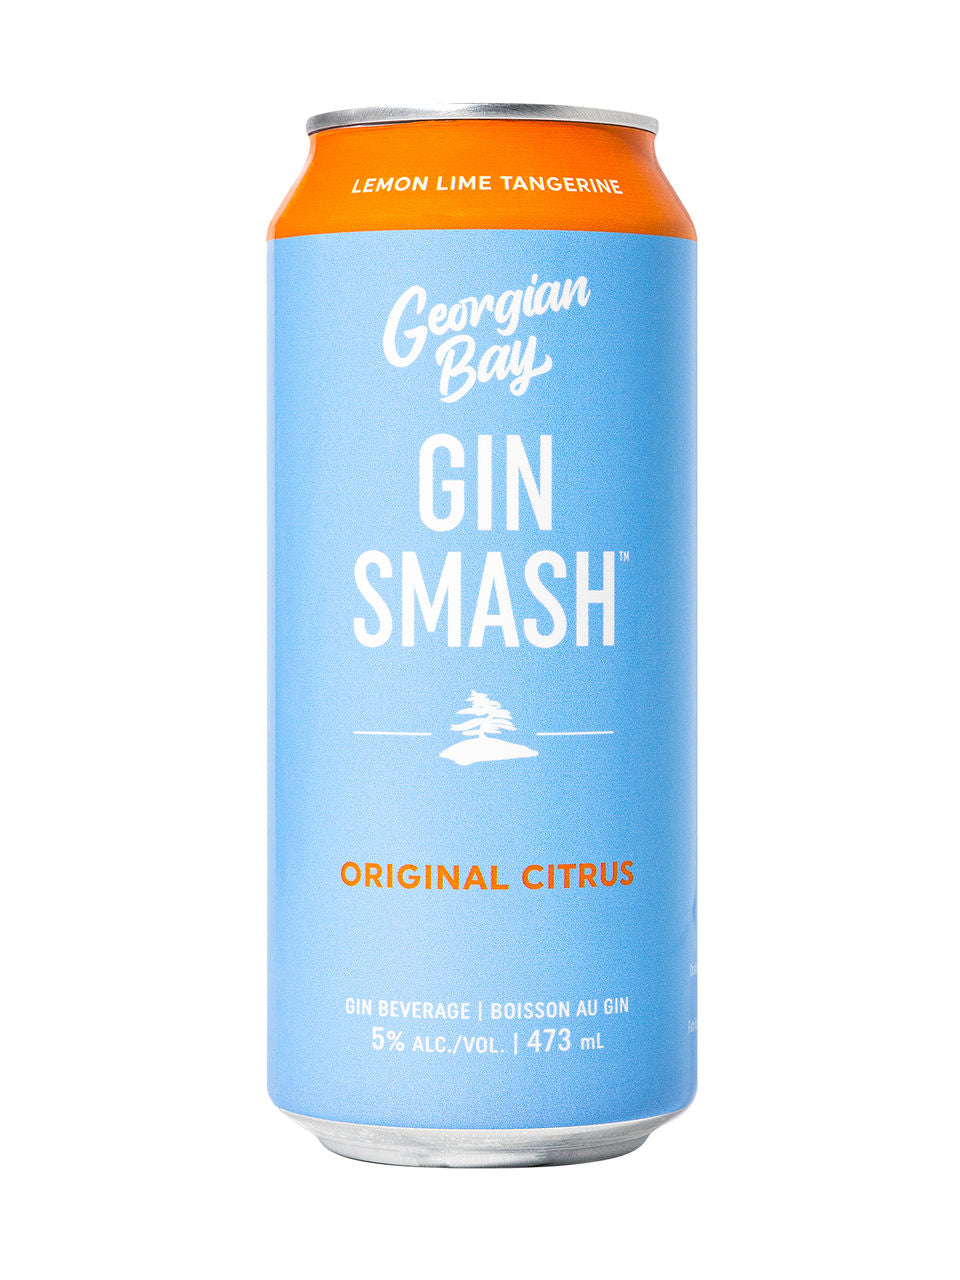 Georgian Bay Gin Smash 473 mL can